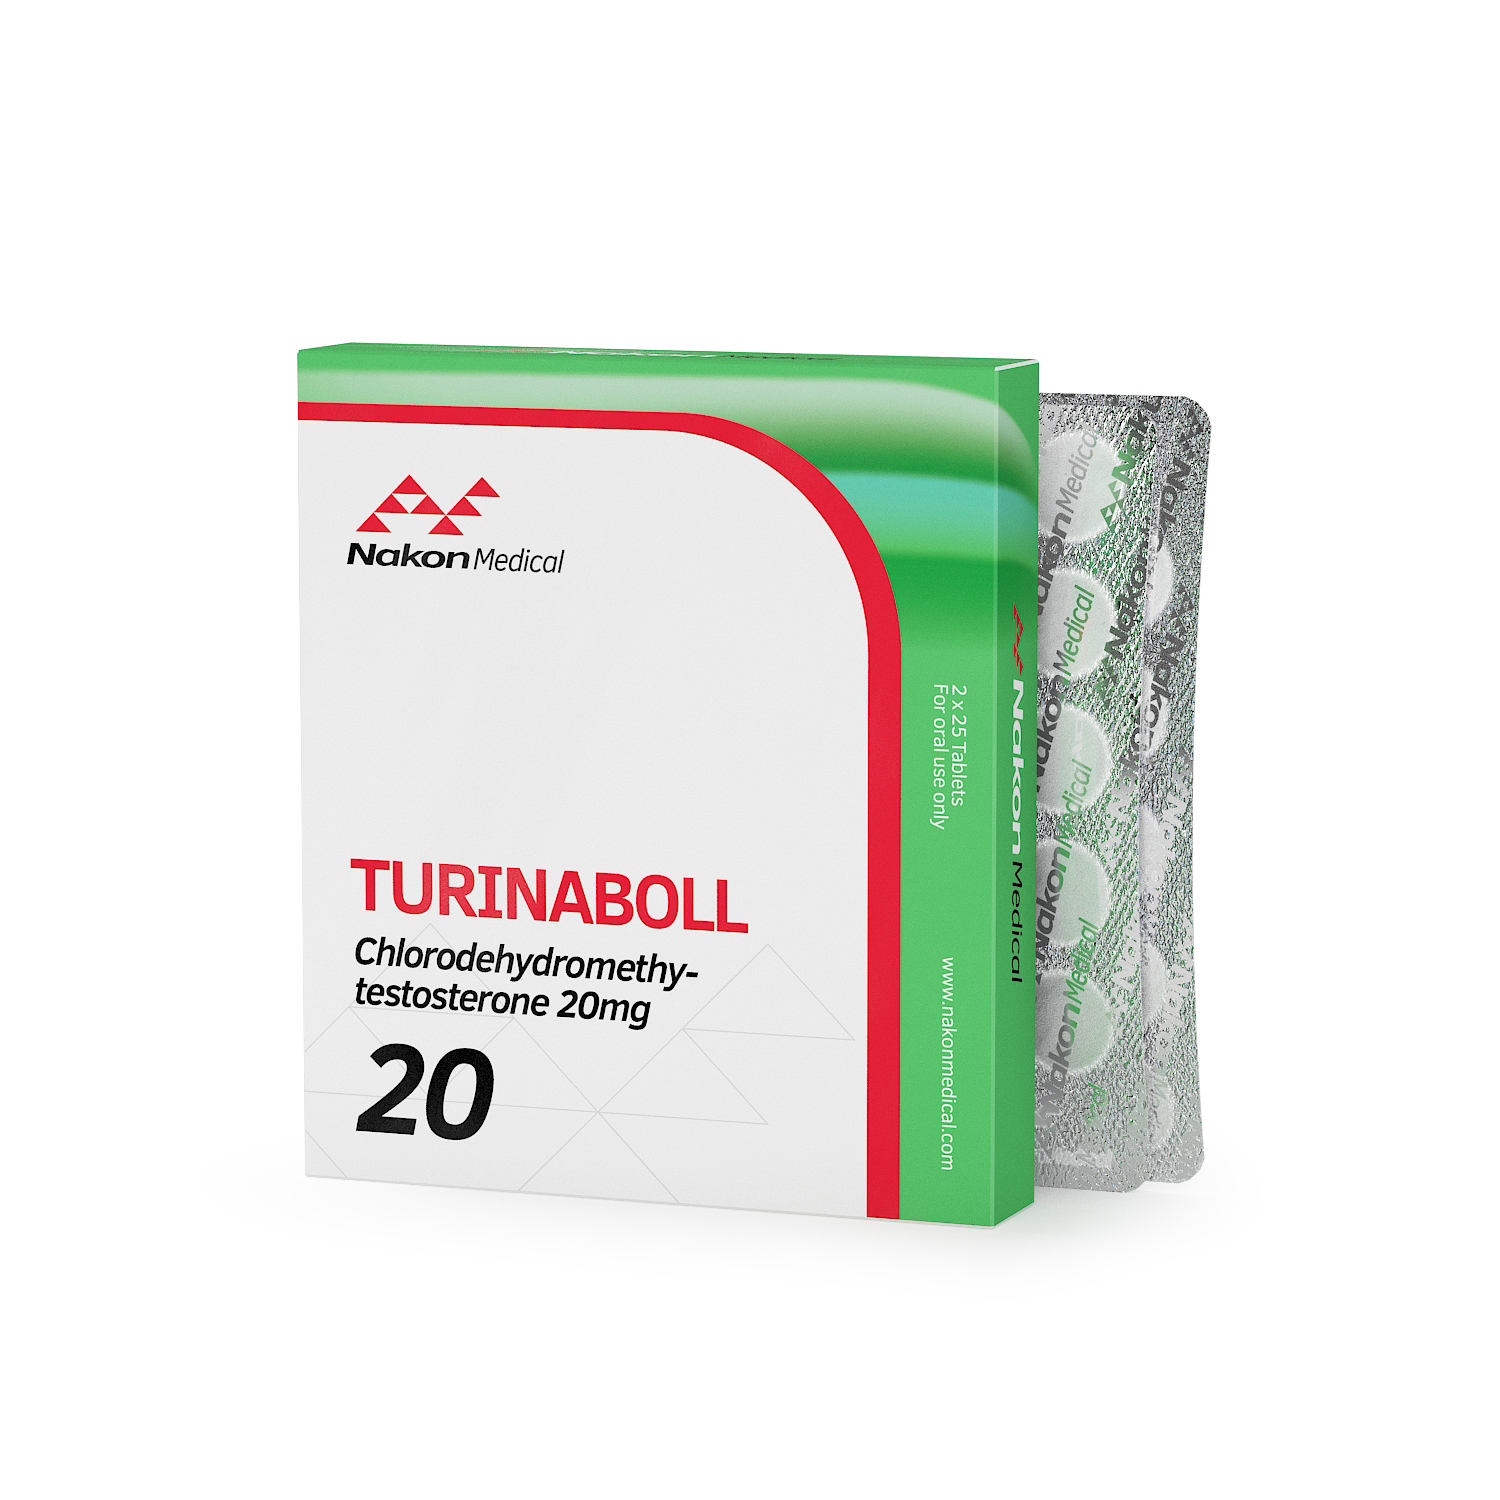 Turinaboll-20mg